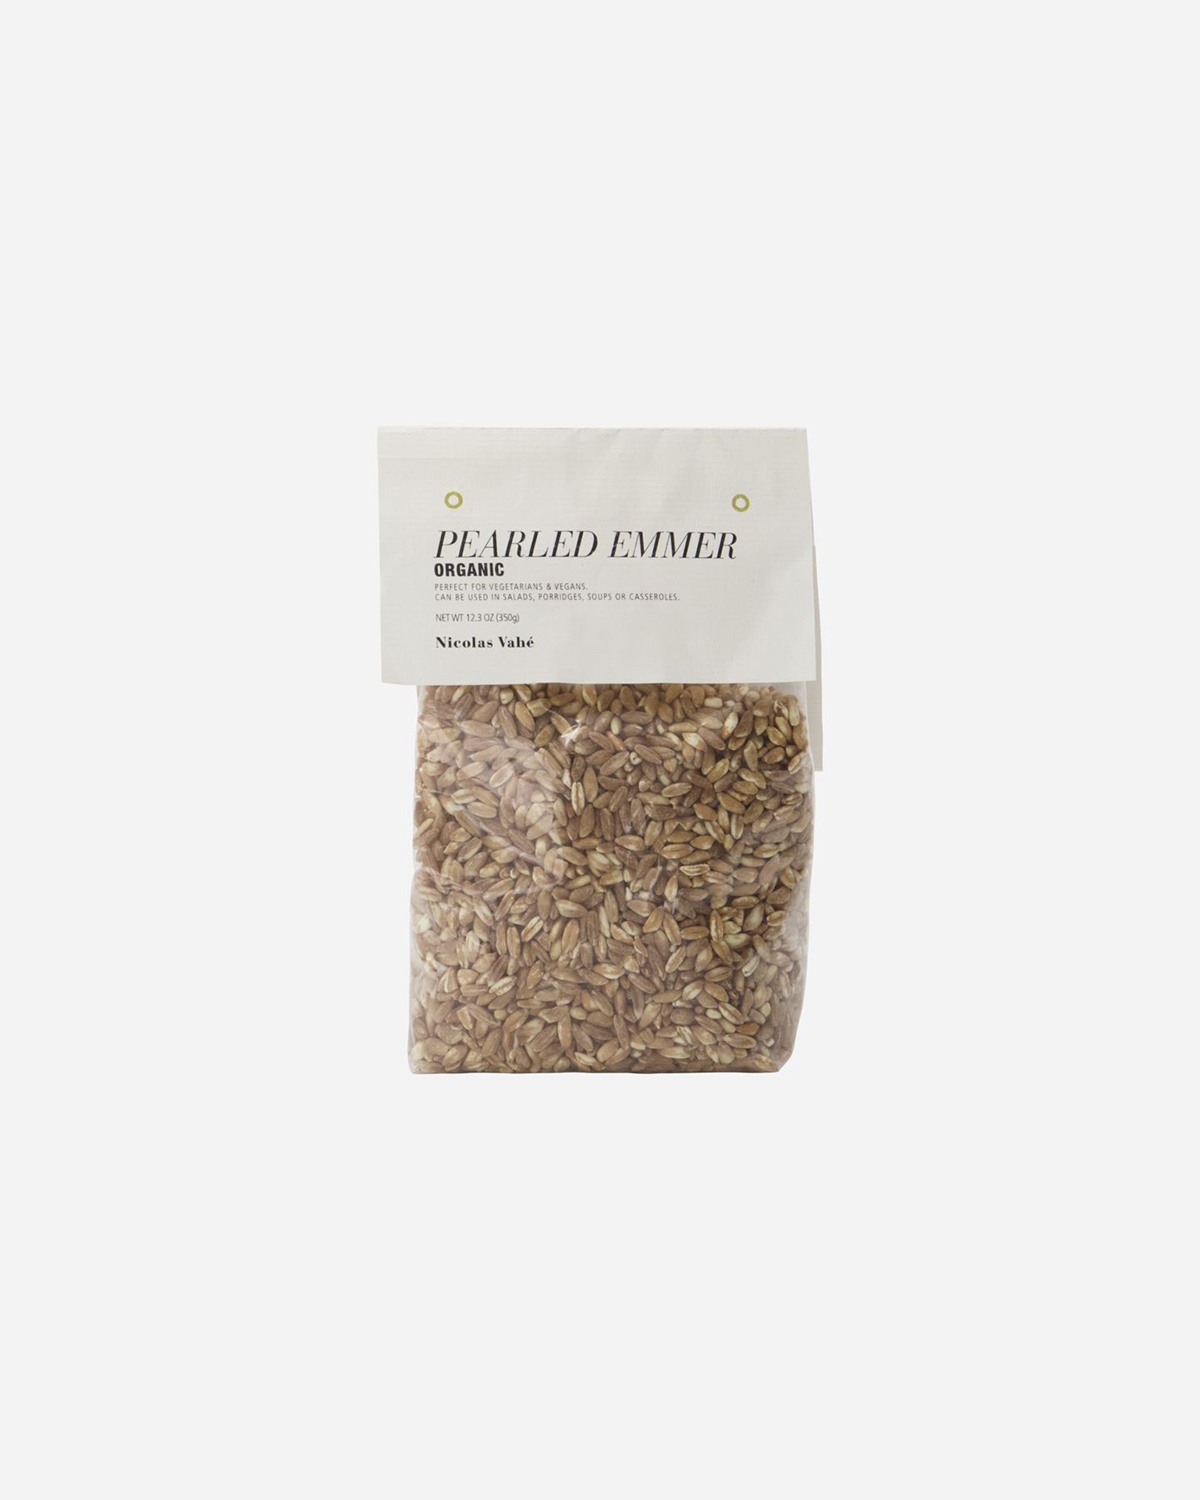 Organic Pearled Emmer, 350 g.